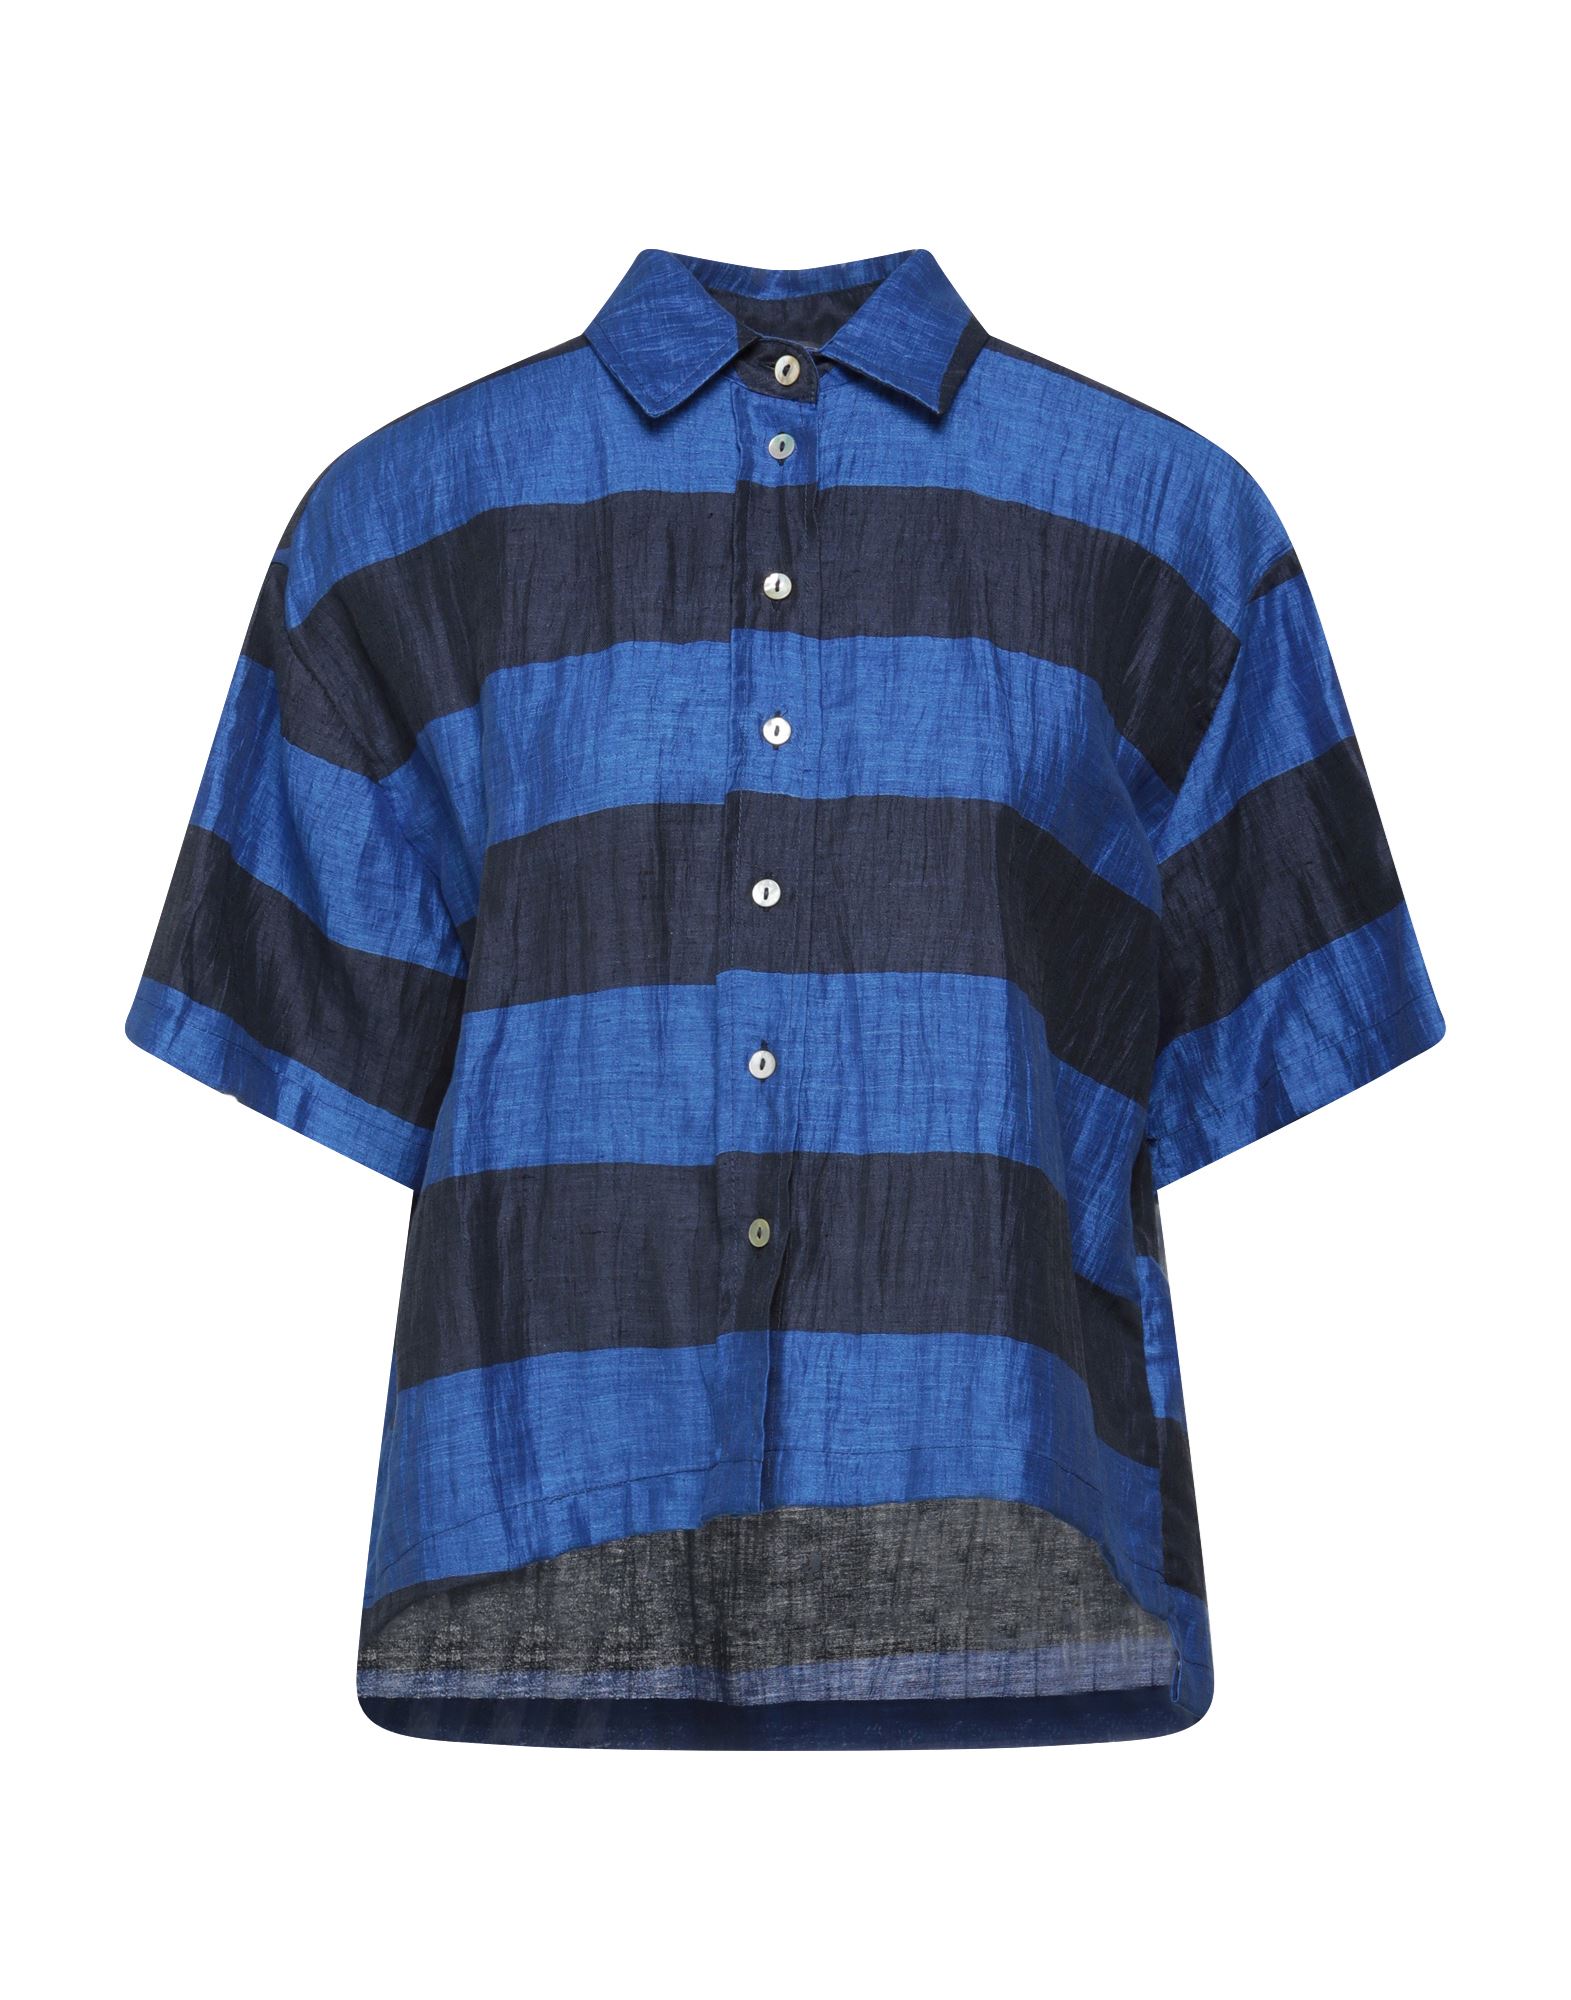 Croche Shirts In Blue